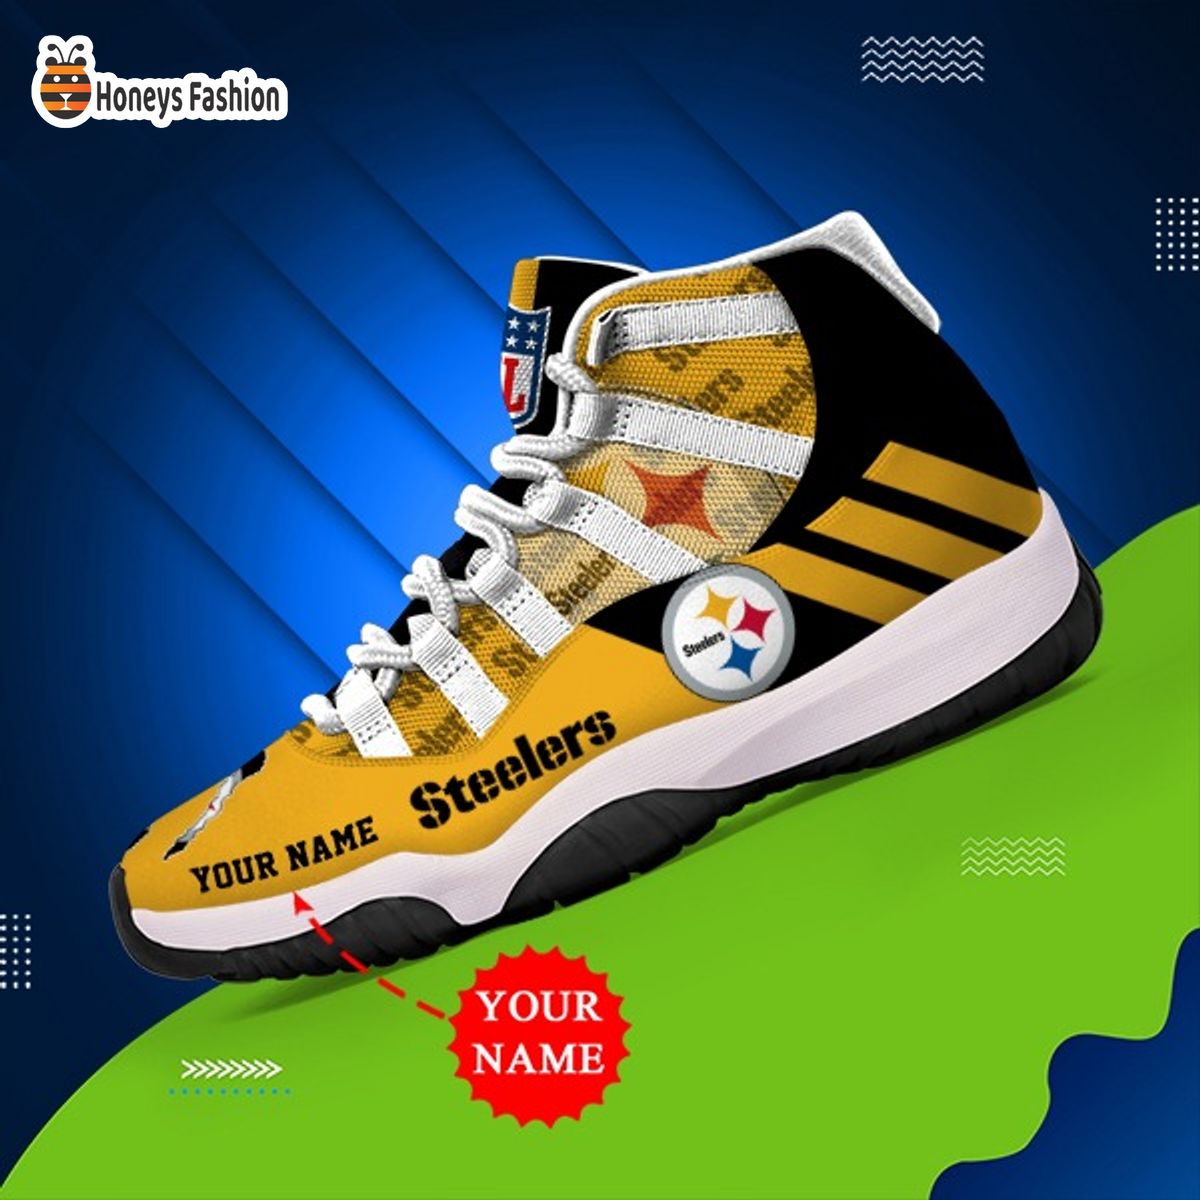 Pittsburgh Steelers NFL Adidas Personalized Air Jordan 11 Shoes